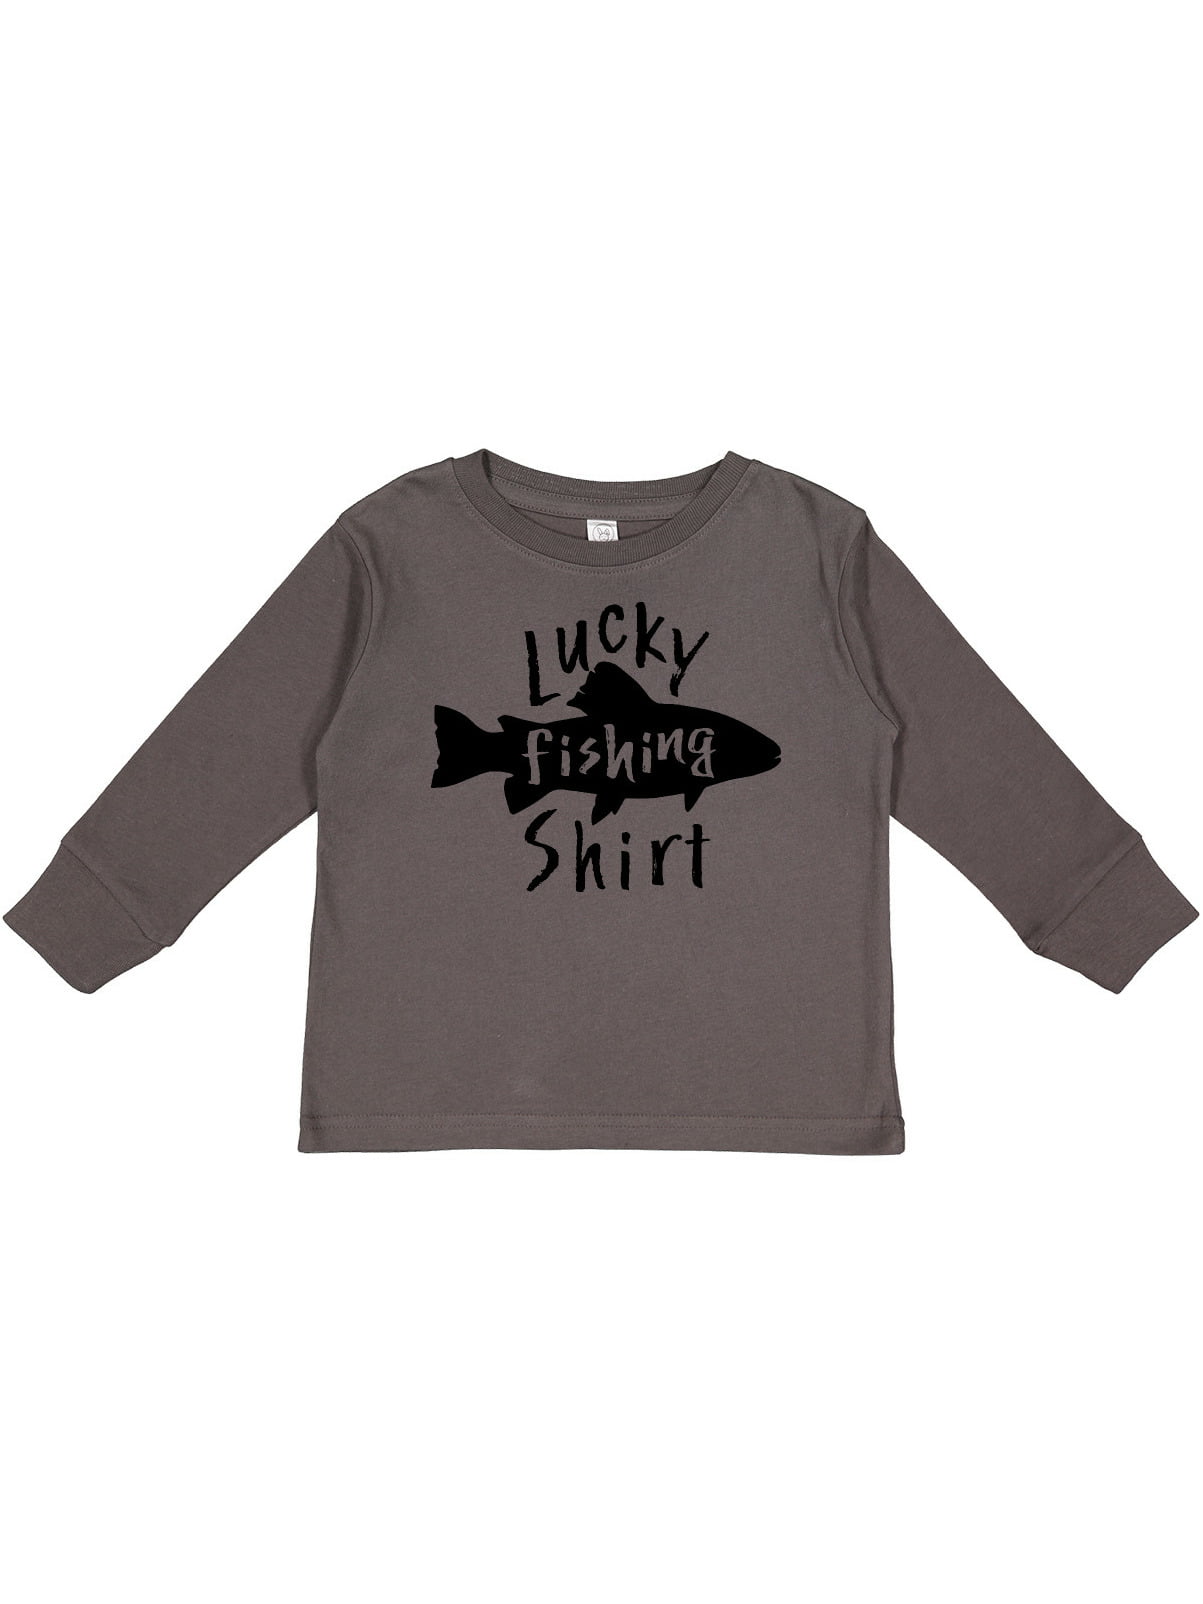 Fishing Lover Kids T-shirt Fishing Expert Outdoors Lucky Fishing